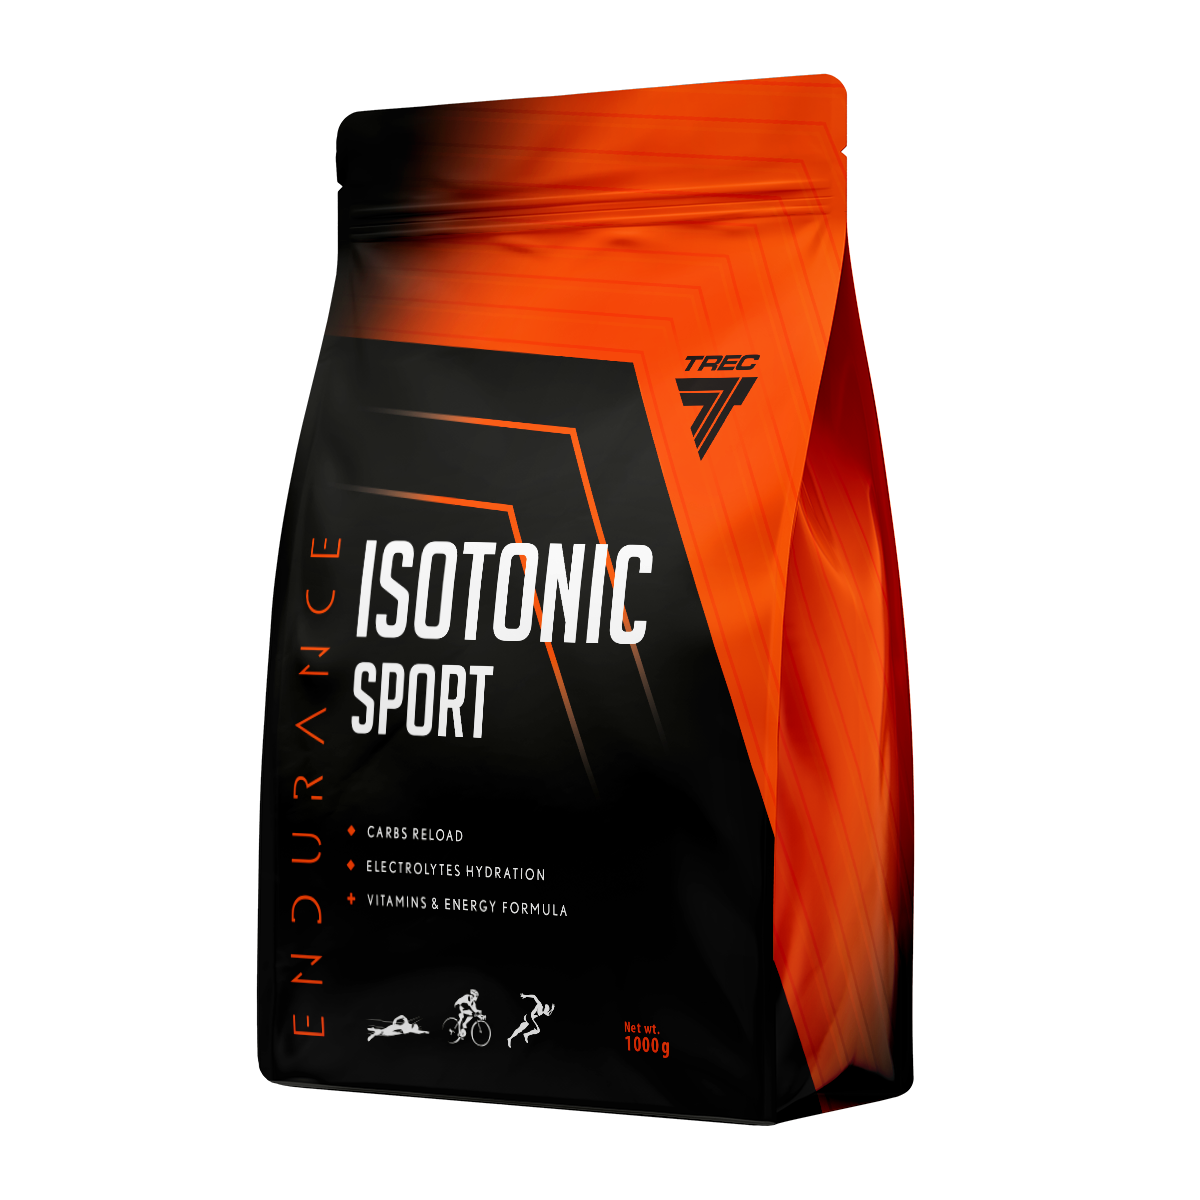 Trec Nutrition Isotonic Sport